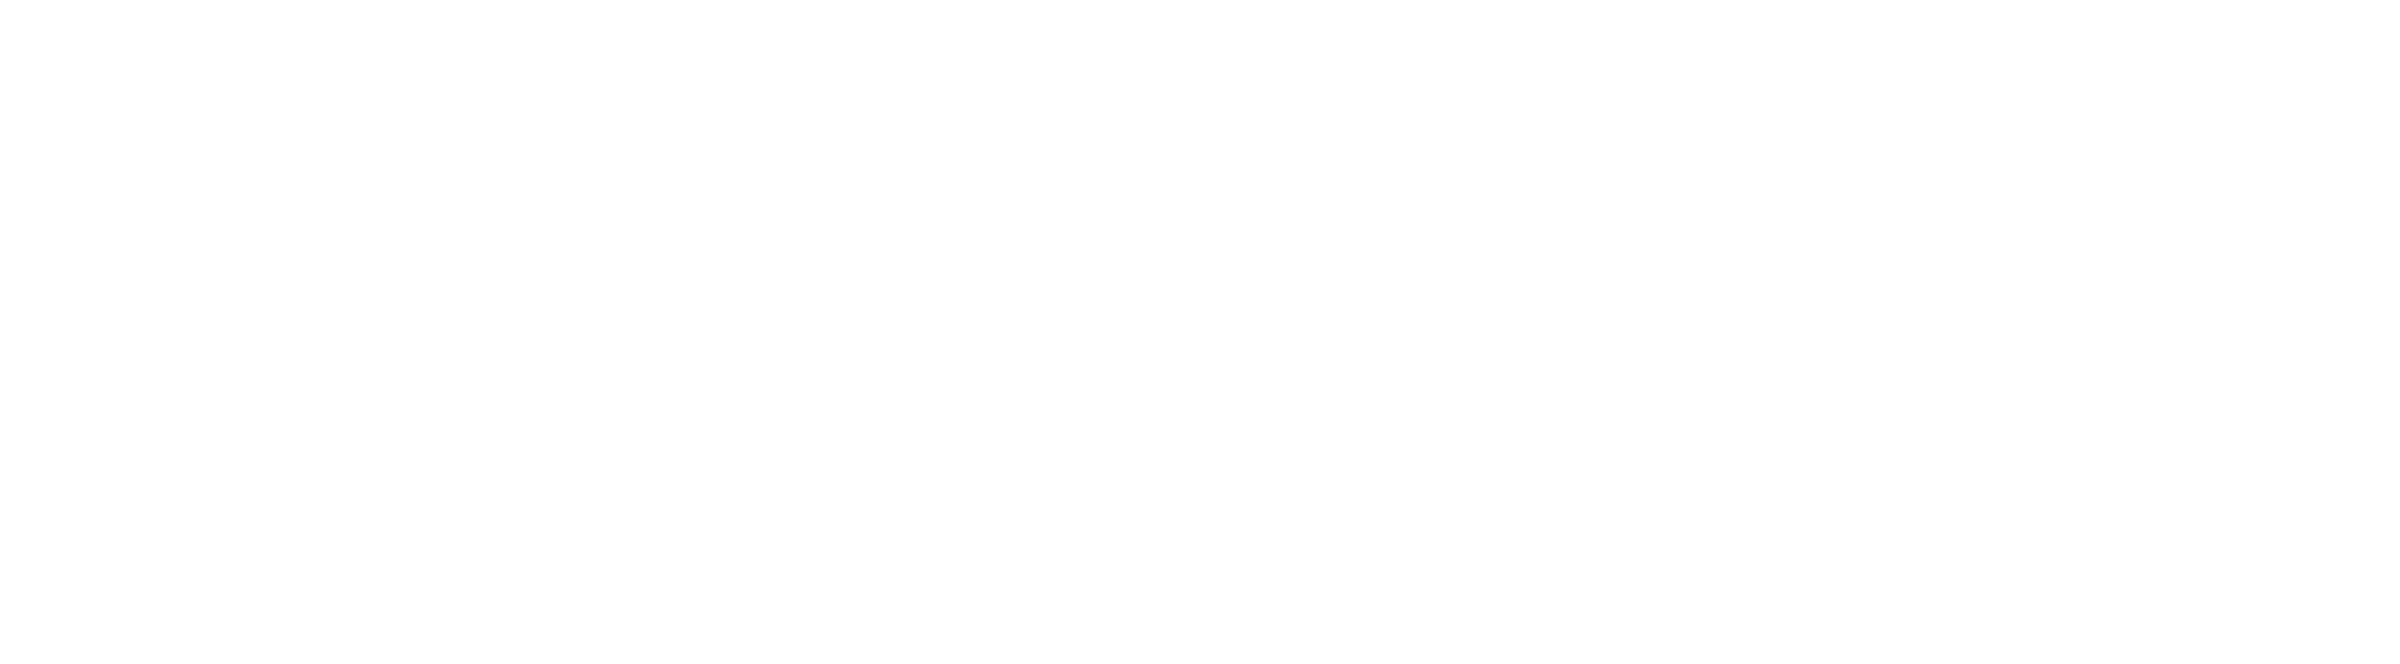 Costco Wholesale Logo Black And White - Crowne Plaza White Logo (2400x664), Png Download